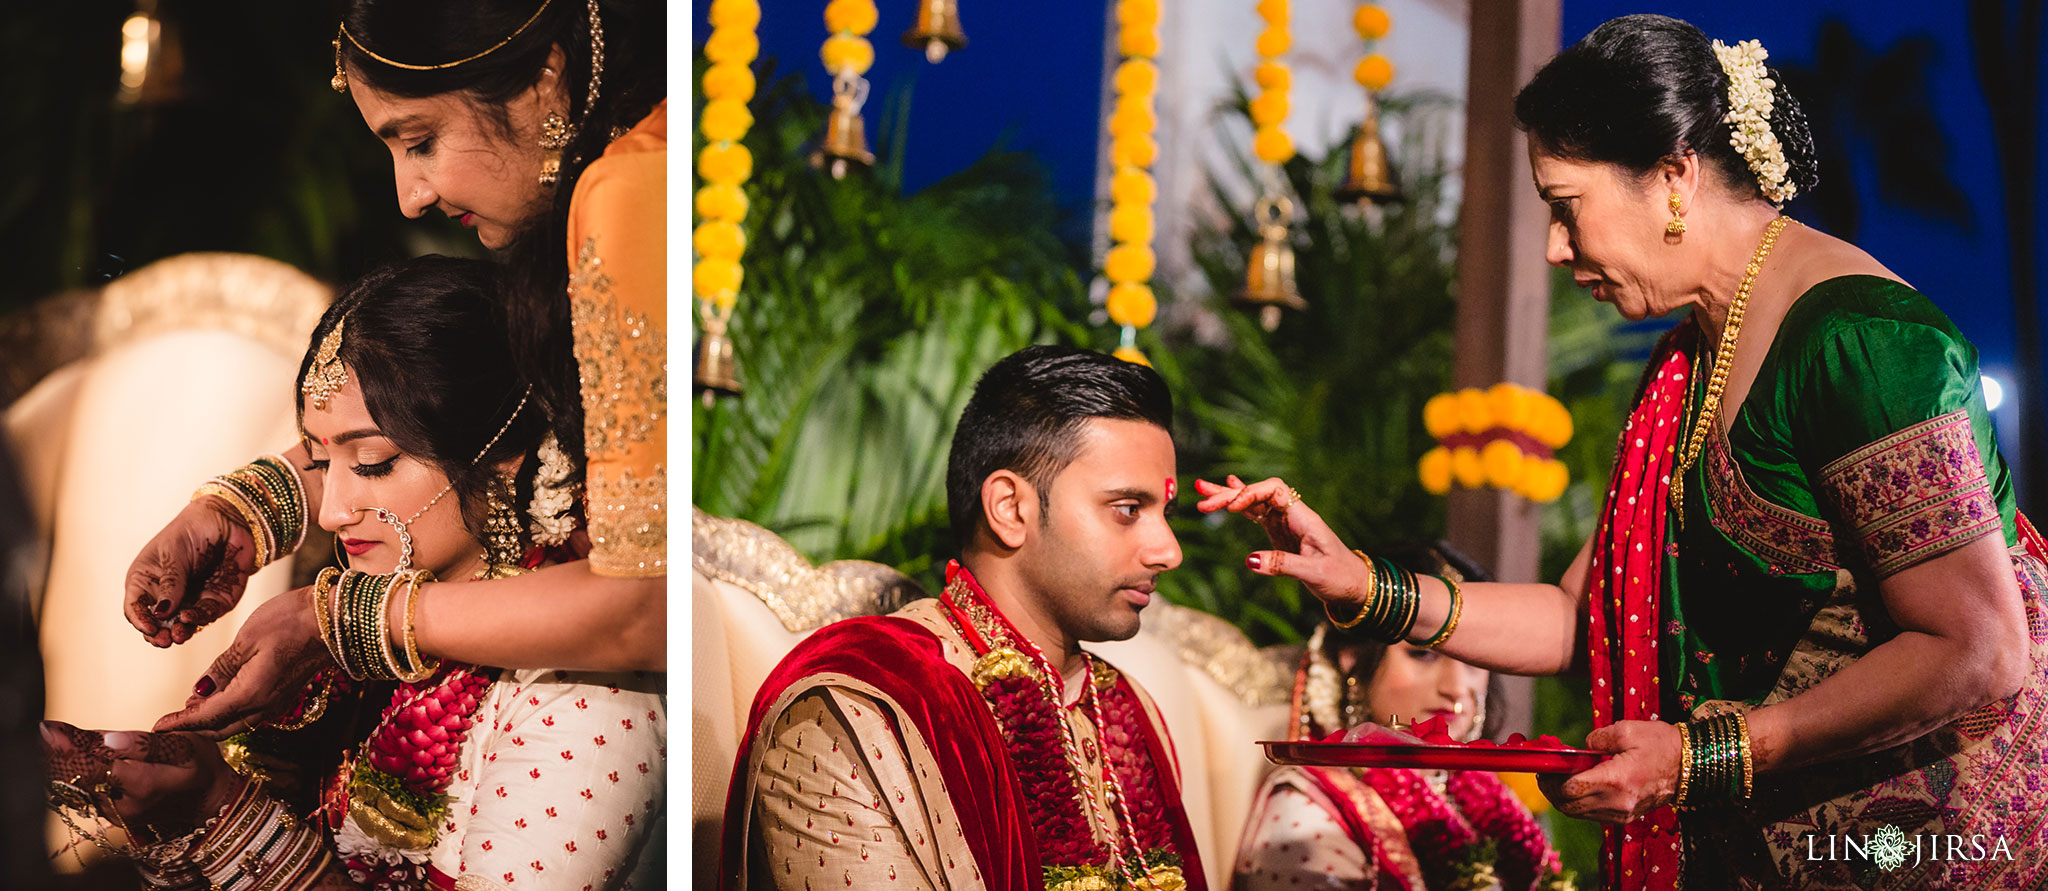 41 hotel irvine indian wedding ceremony photography